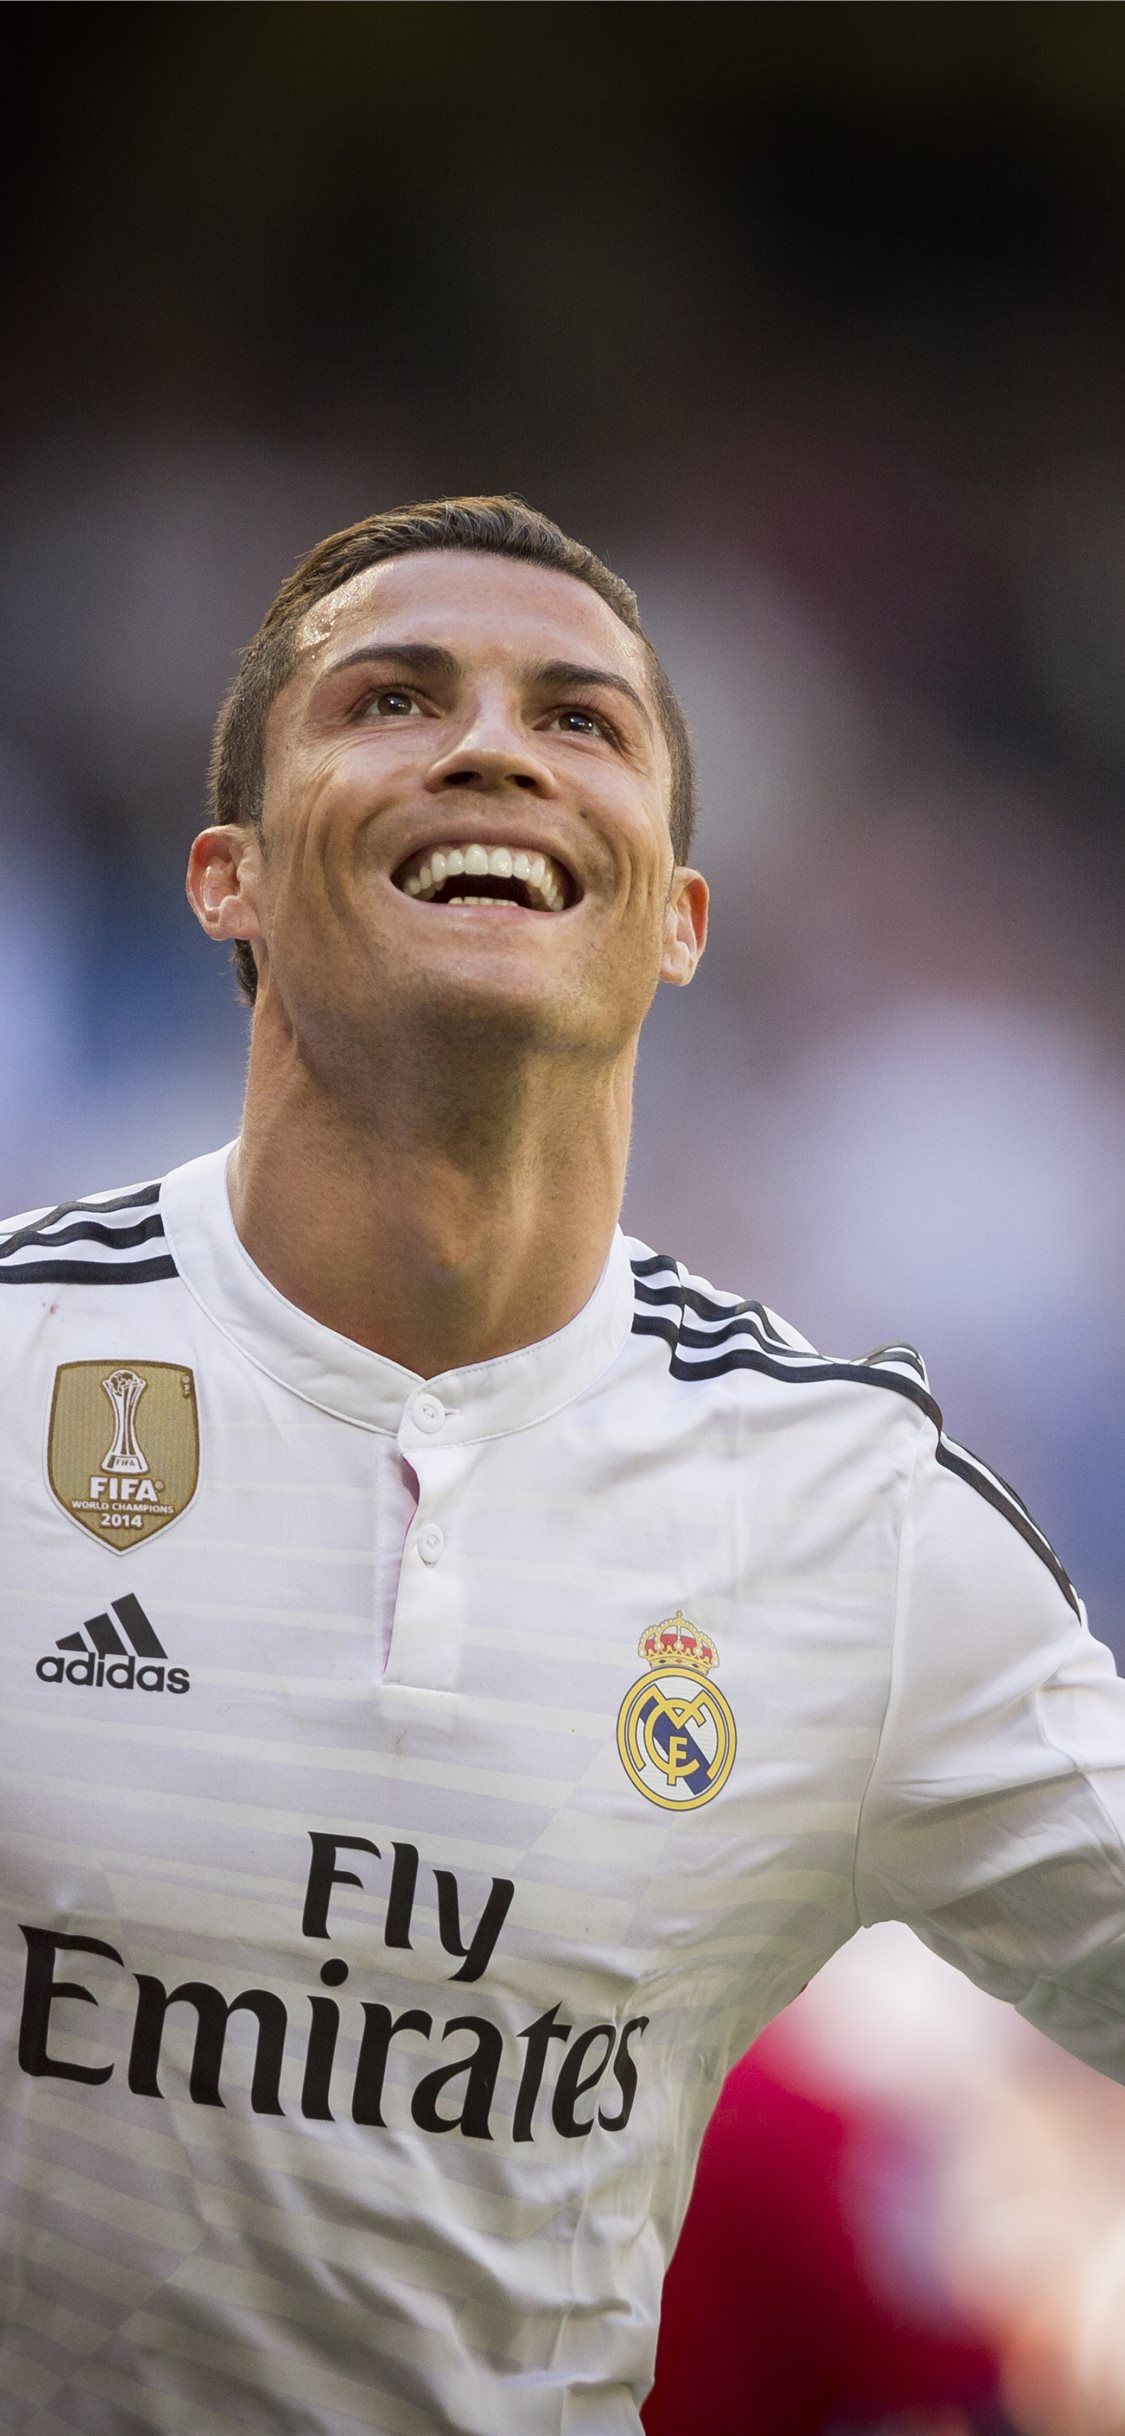 Cristiano Ronaldo Portugal Real Madrid soccer 5K iPhone Wallpaper Free Download